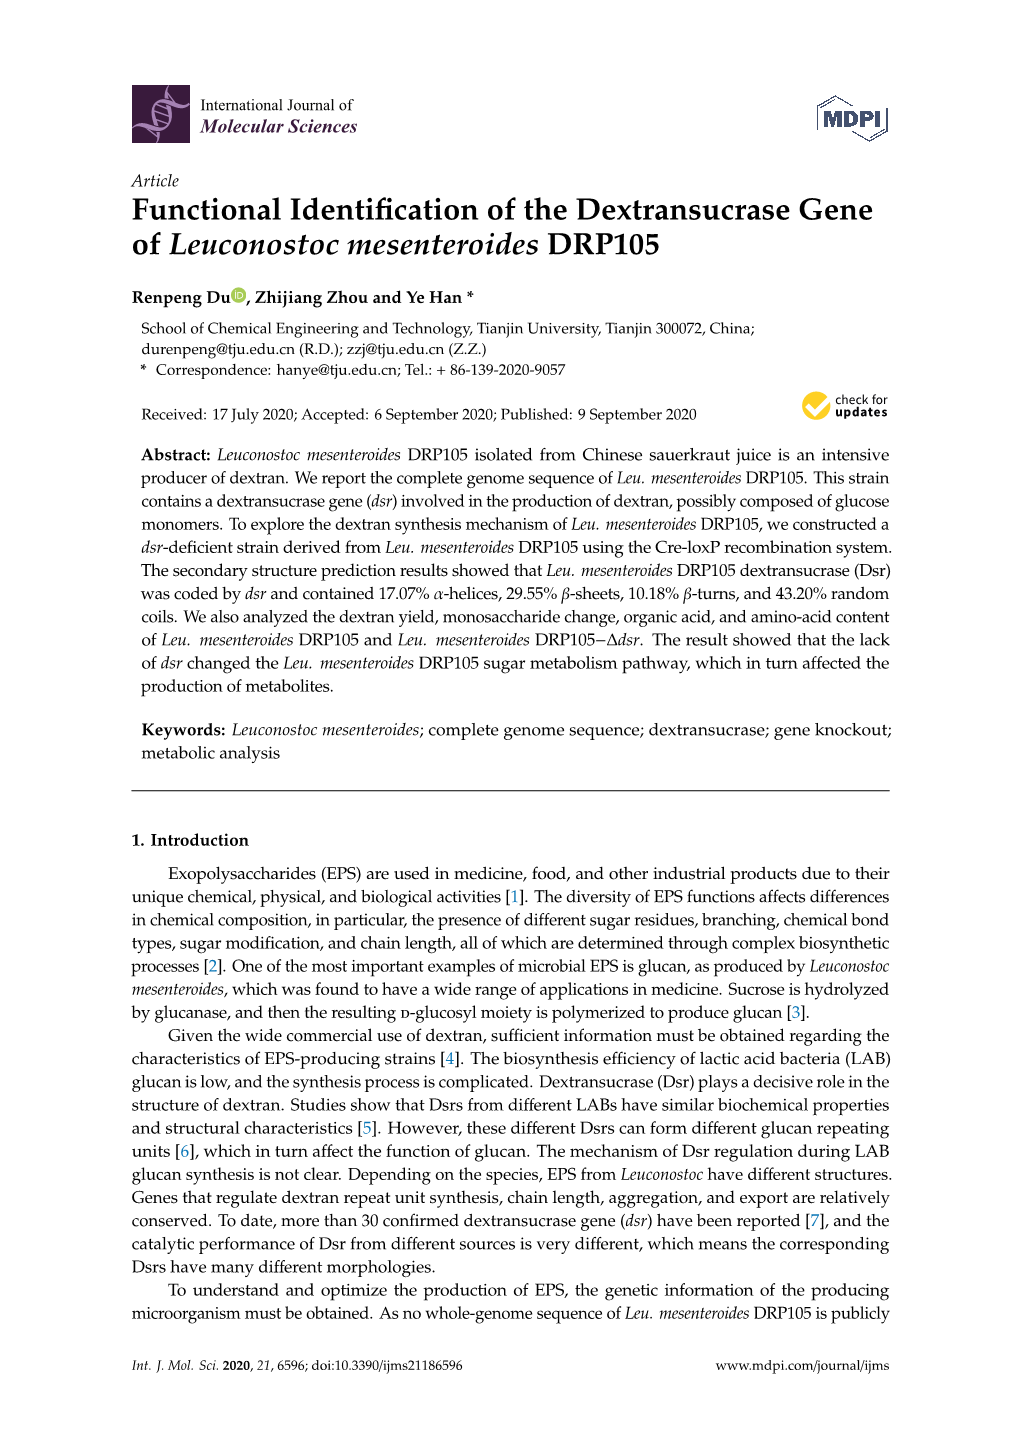 Functional Identification of the Dextransucrase Gene of Leuconostoc Mesenteroides DRP105